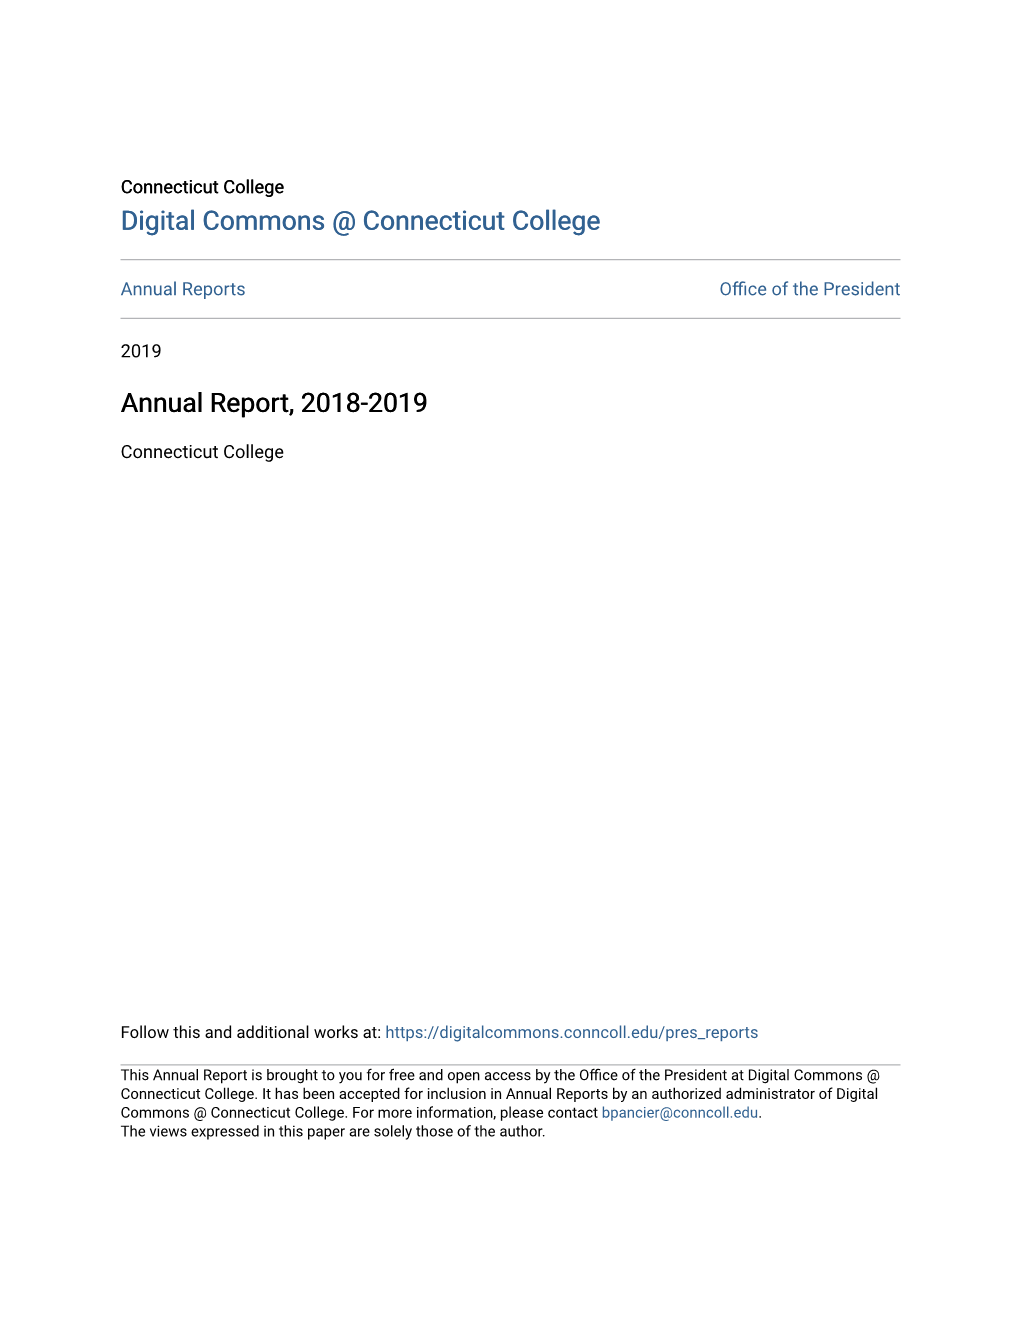 Annual Report, 2018-2019